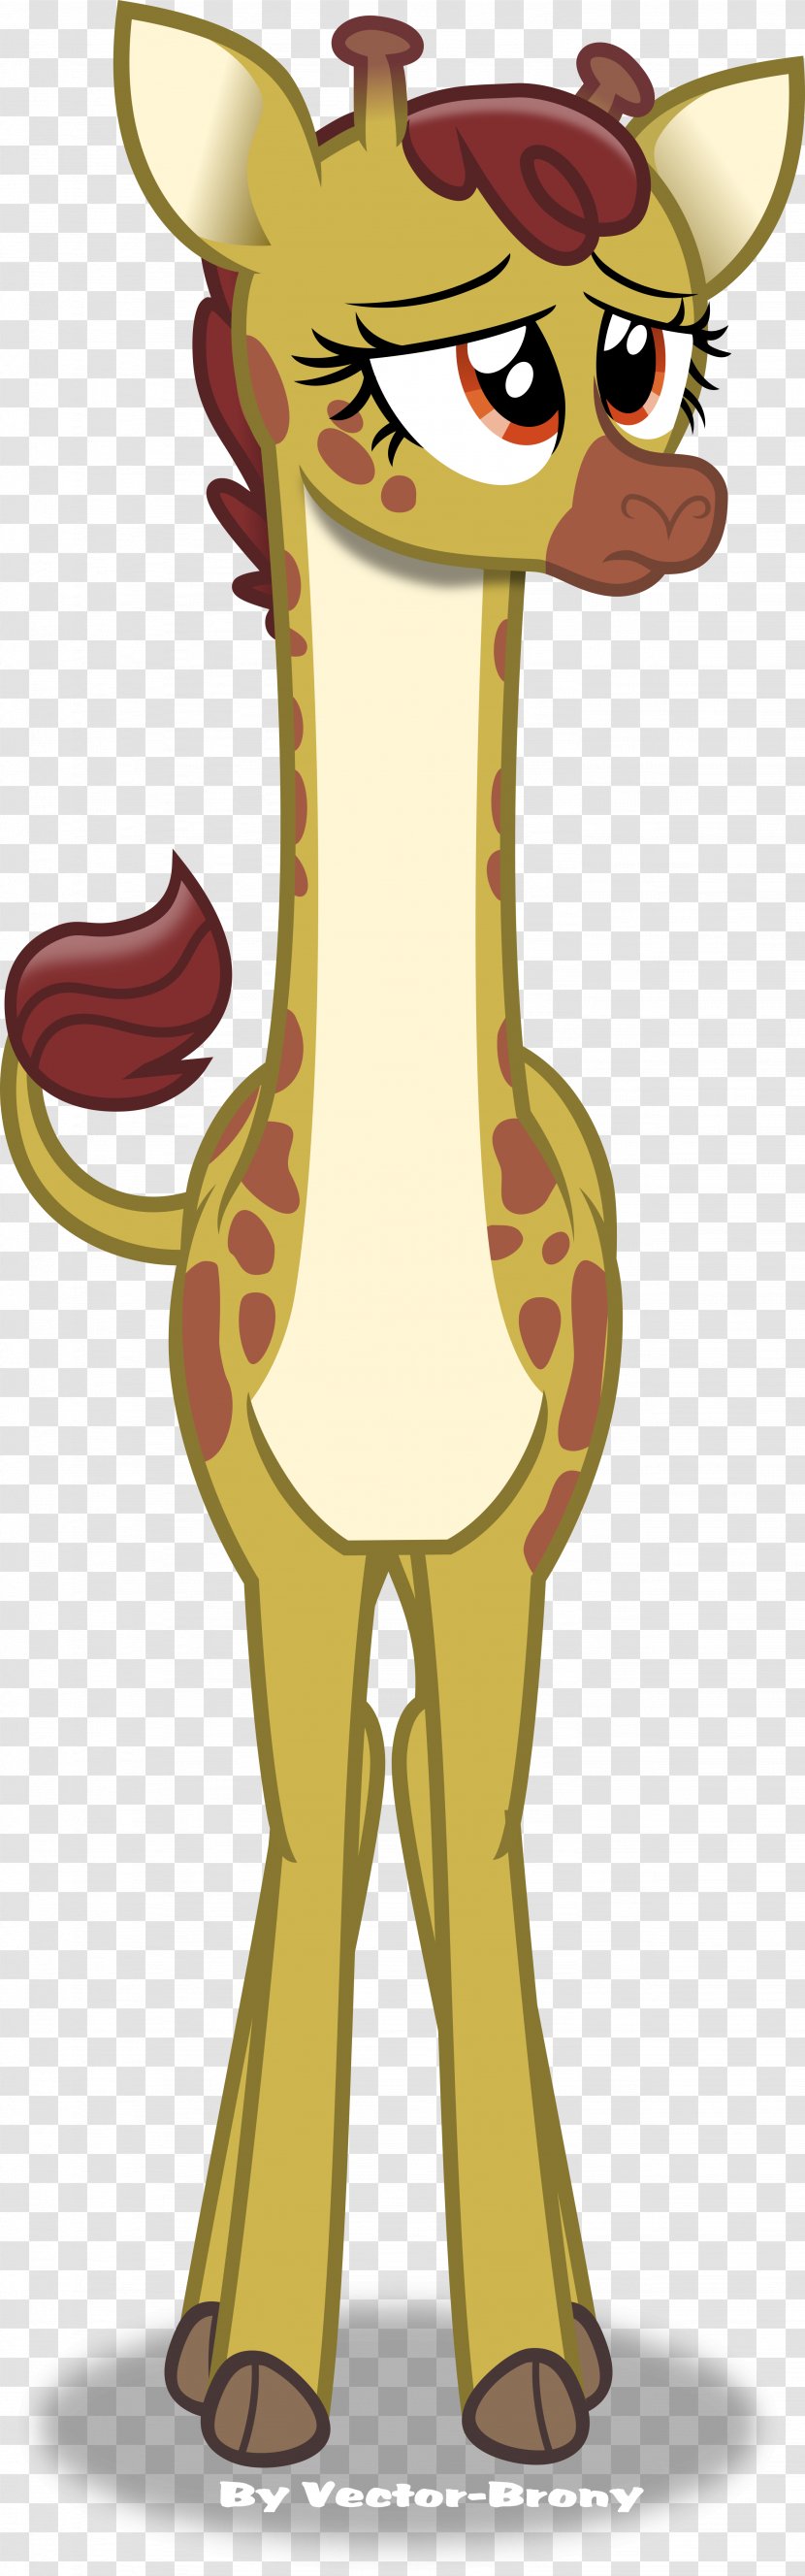 My Little Pony: Friendship Is Magic Fandom Giraffe Animal - Cartoon Transparent PNG